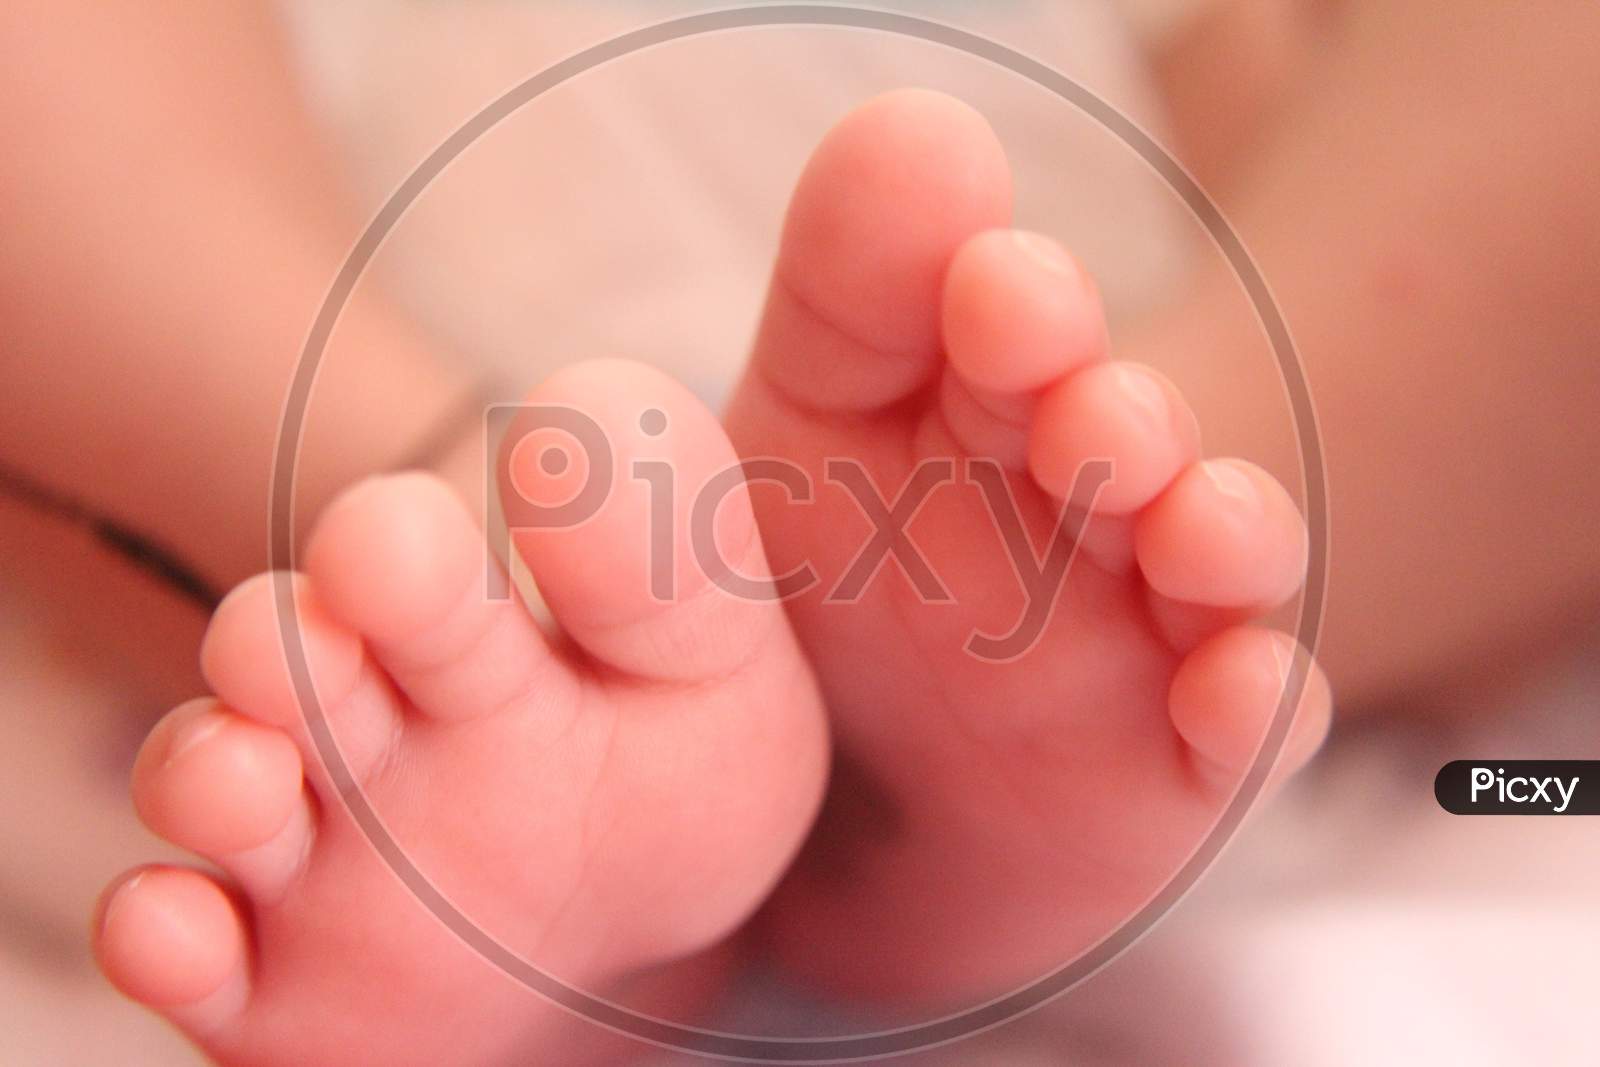 Closeup New Born Infant Baby Feet.